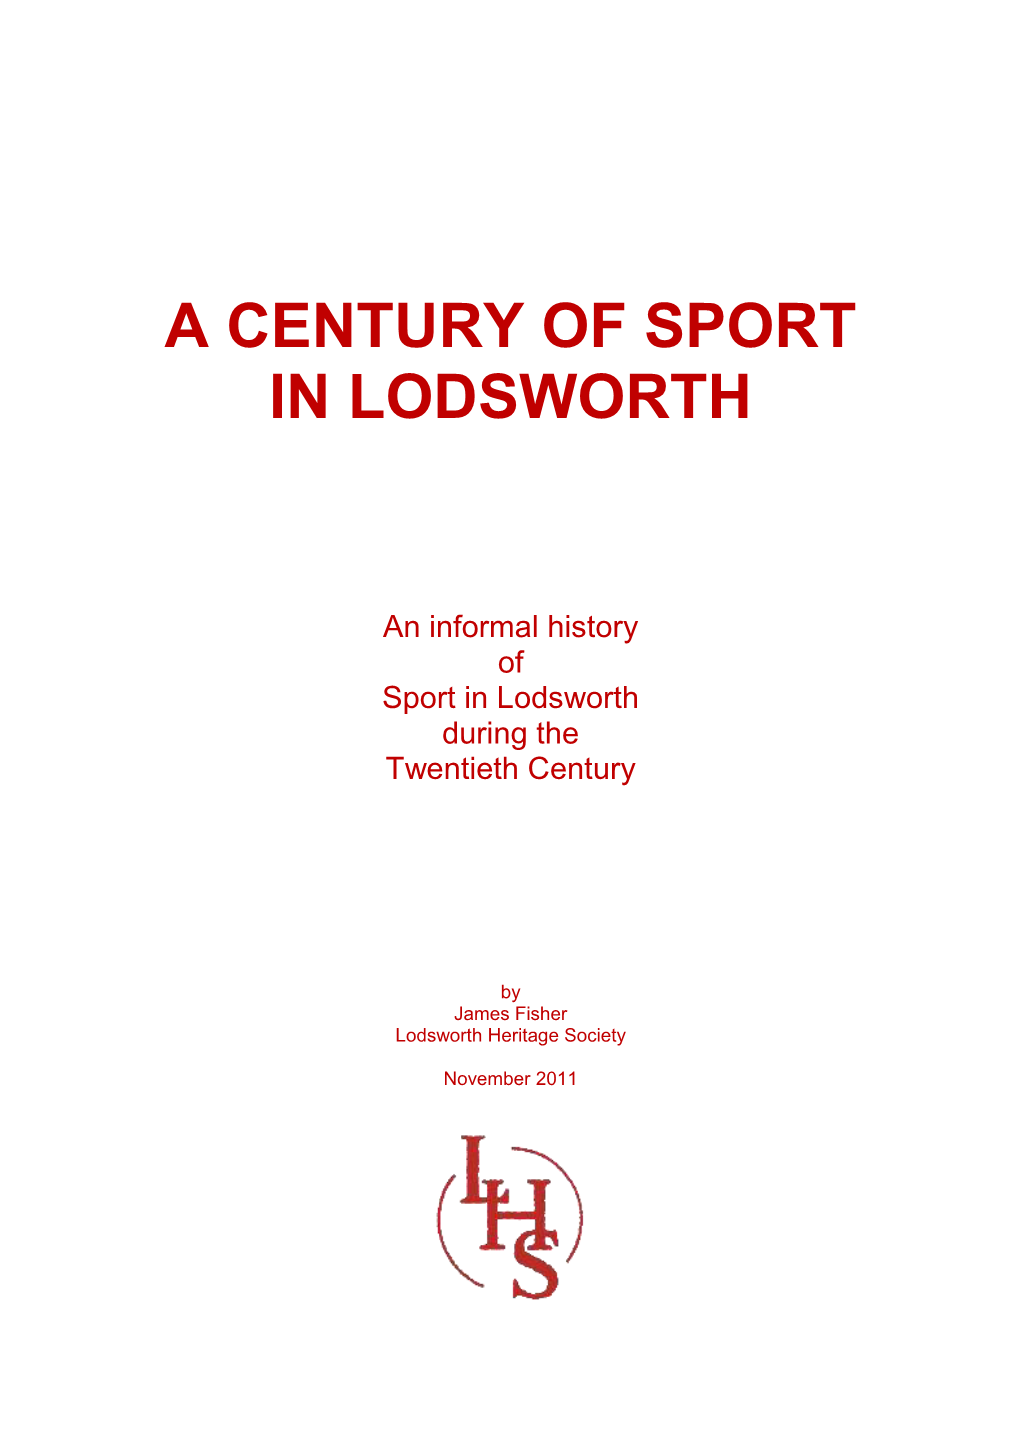 A Century of Sport in Lodsworth